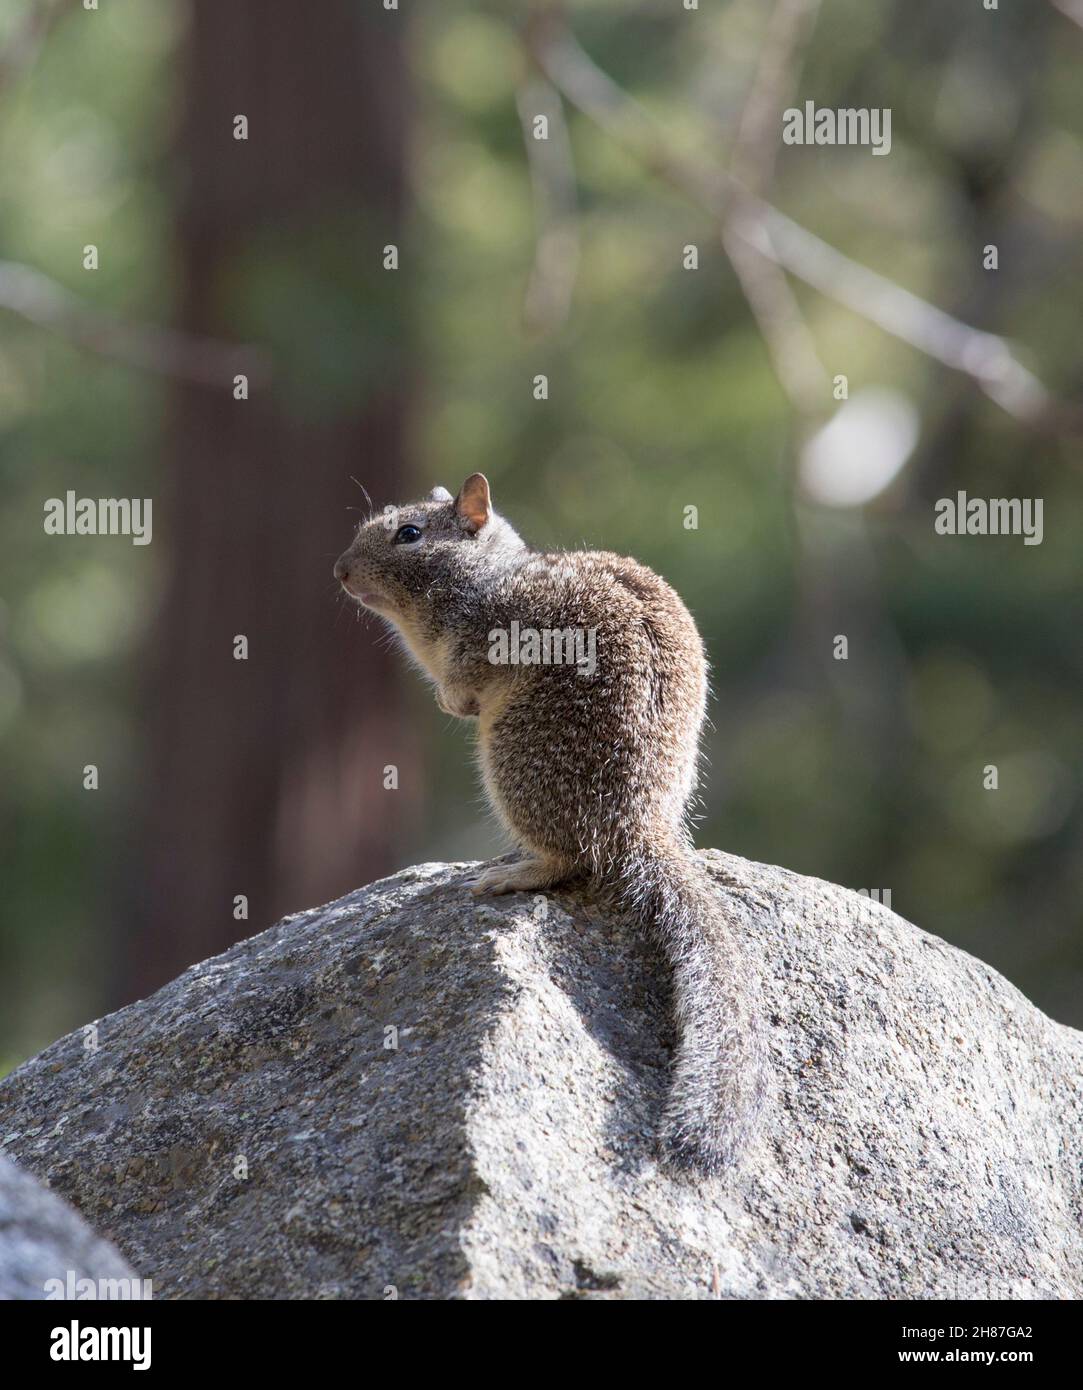 Yosemite National Park, California, USA. Portrait of a California ground squirrel, Otospermophilus beecheyi, perching on granite boulder. Stock Photo